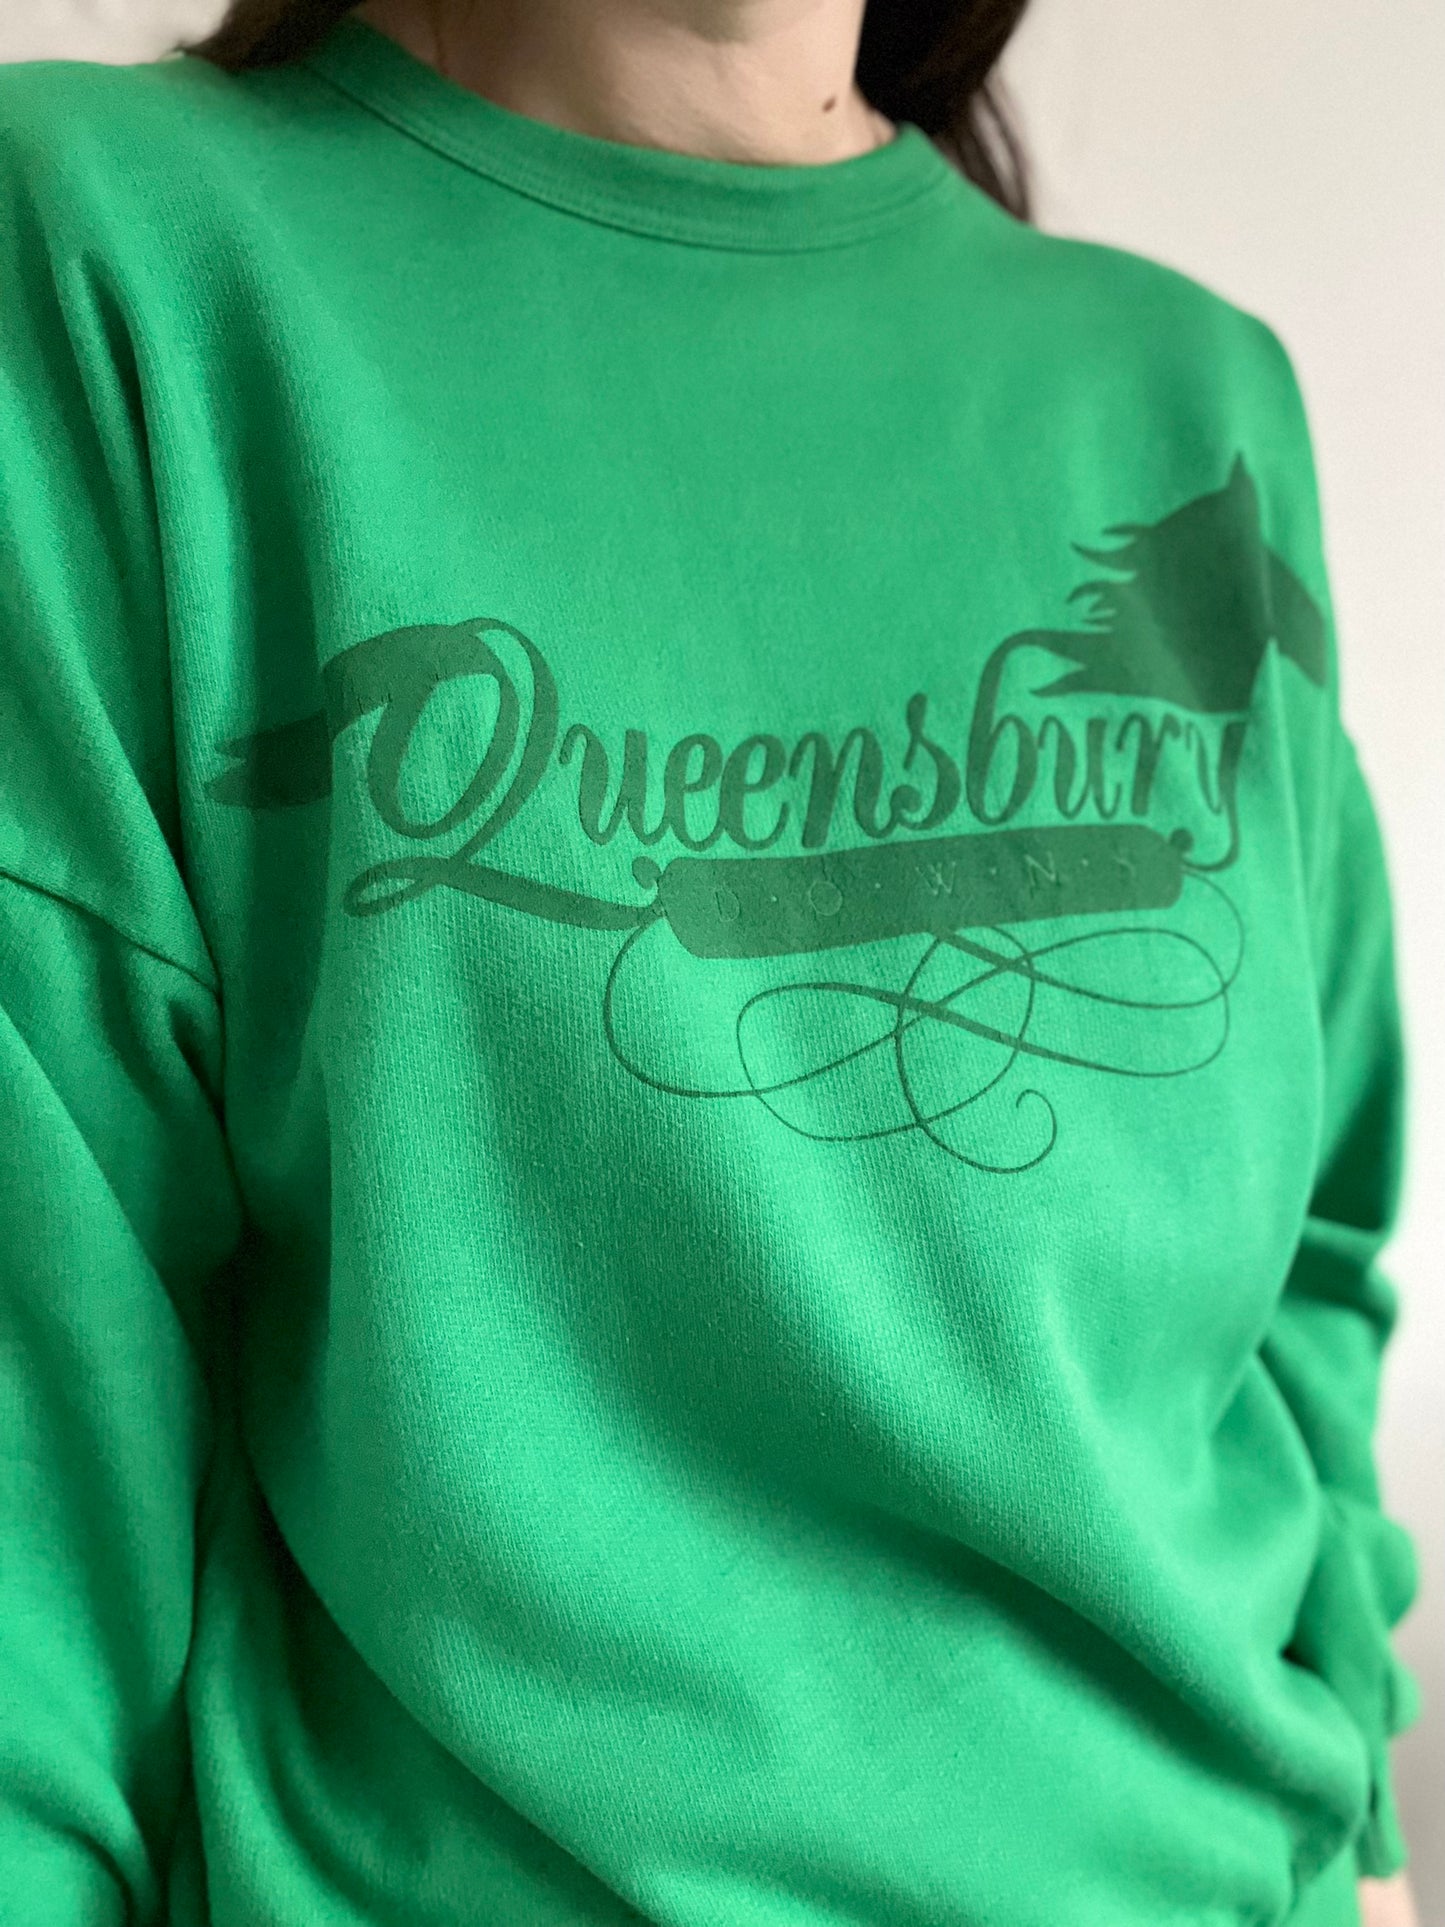 Vintage Queensbury Downs Racing Sweater - L